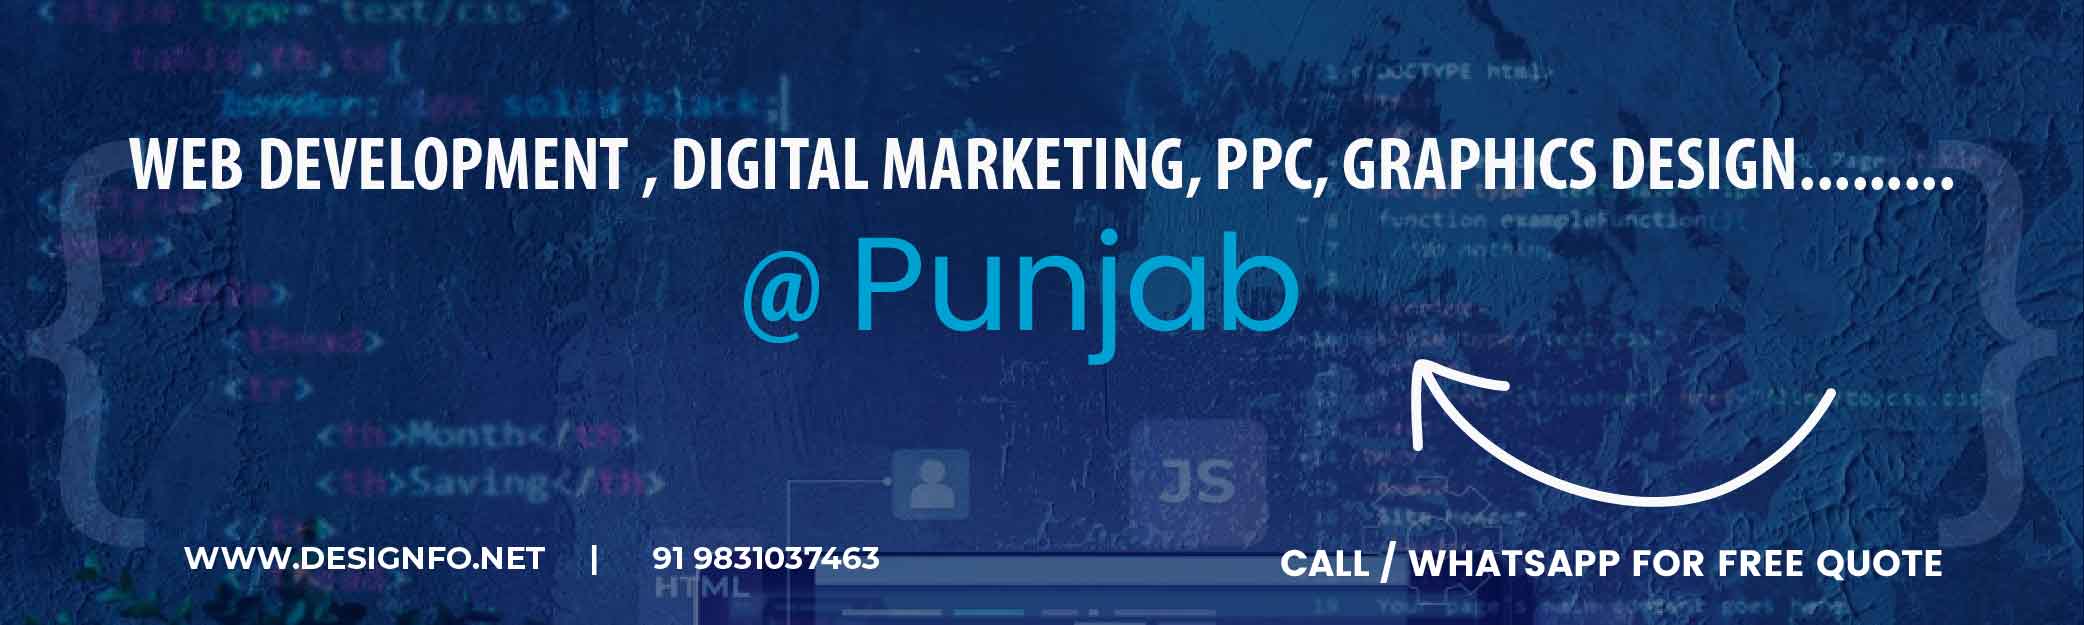 web development service in Punjab